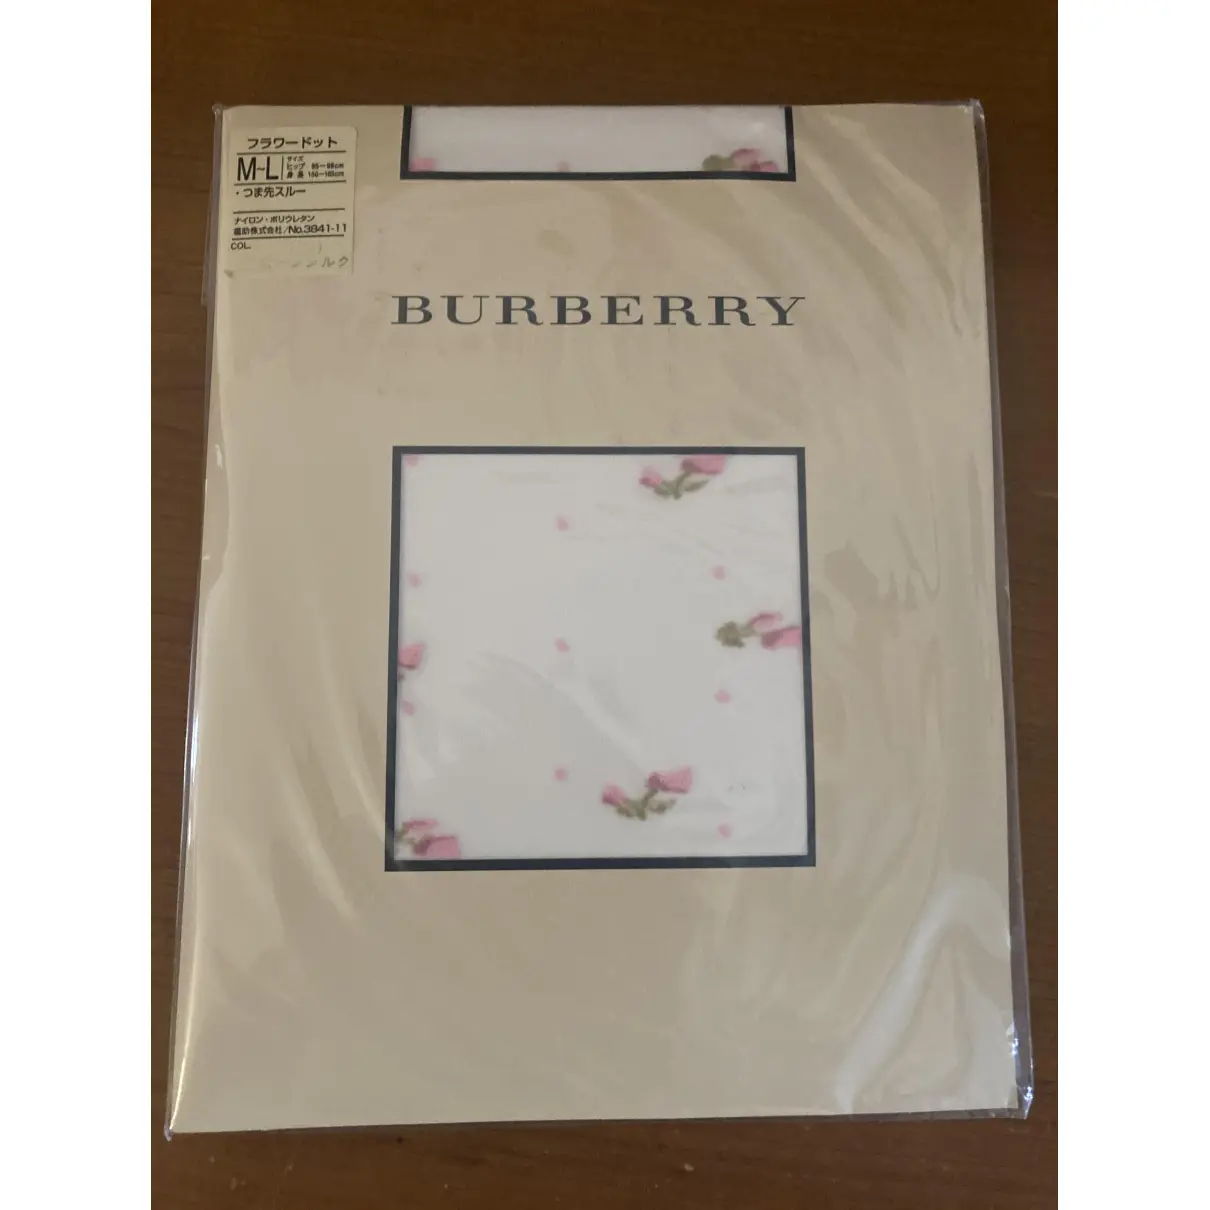 Buy Burberry Tight online